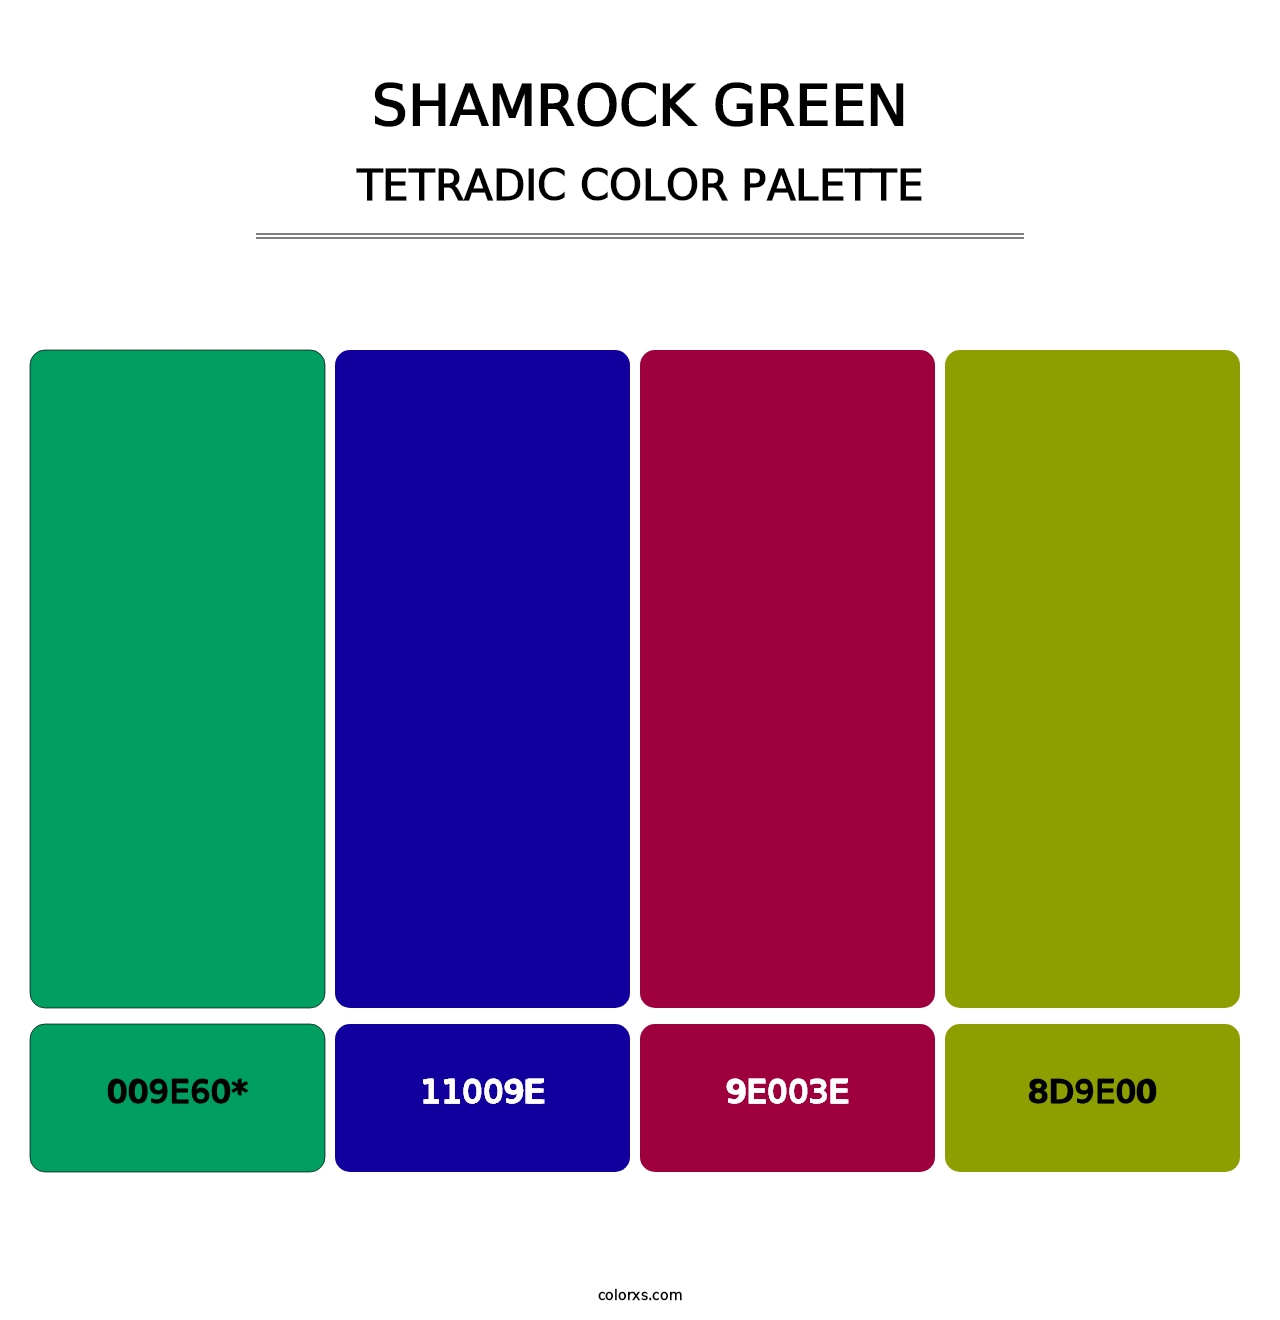 Shamrock Green - Tetradic Color Palette